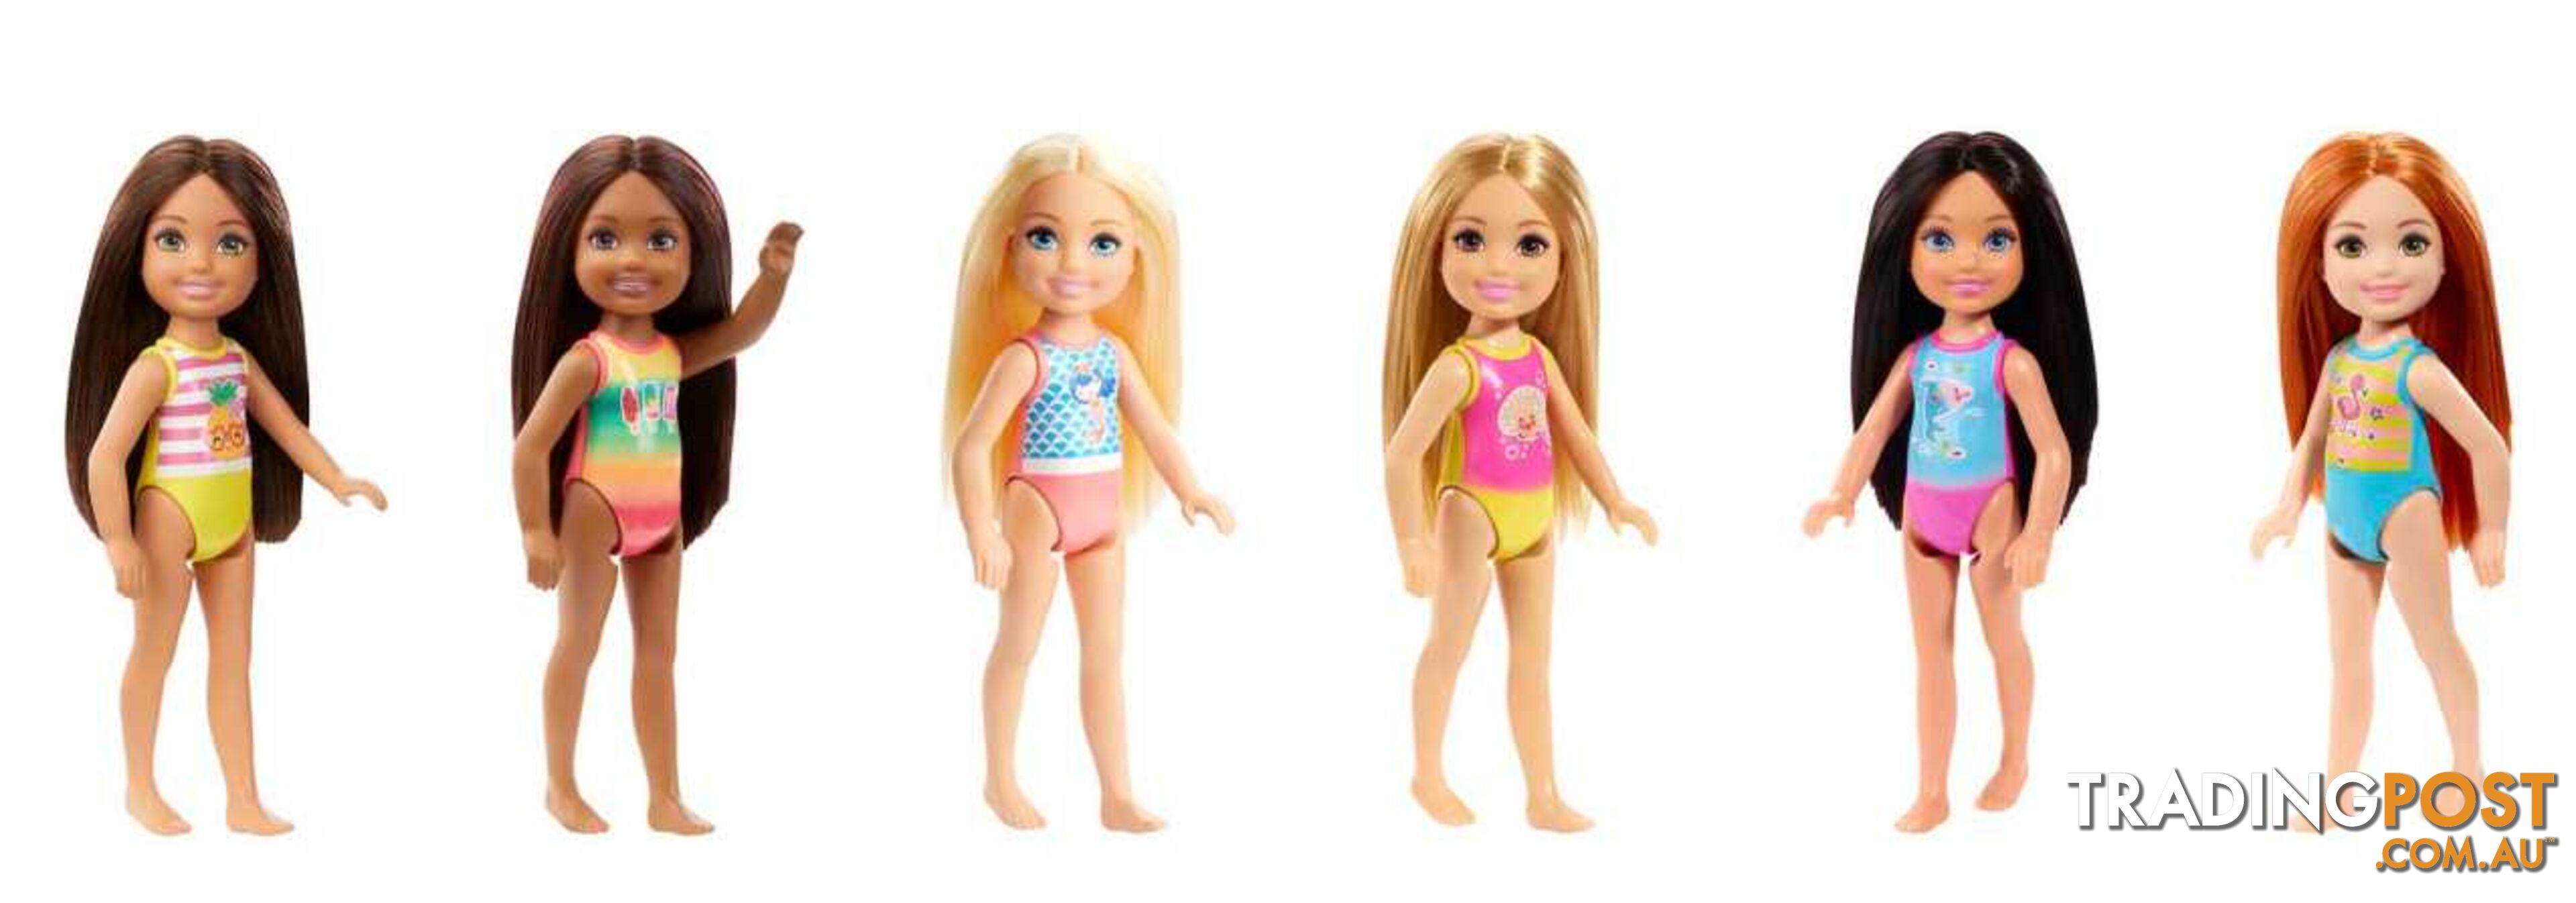 Barbie Club Chelseaâ„¢ Dolls Assortment - Magln73 - 0887961803242